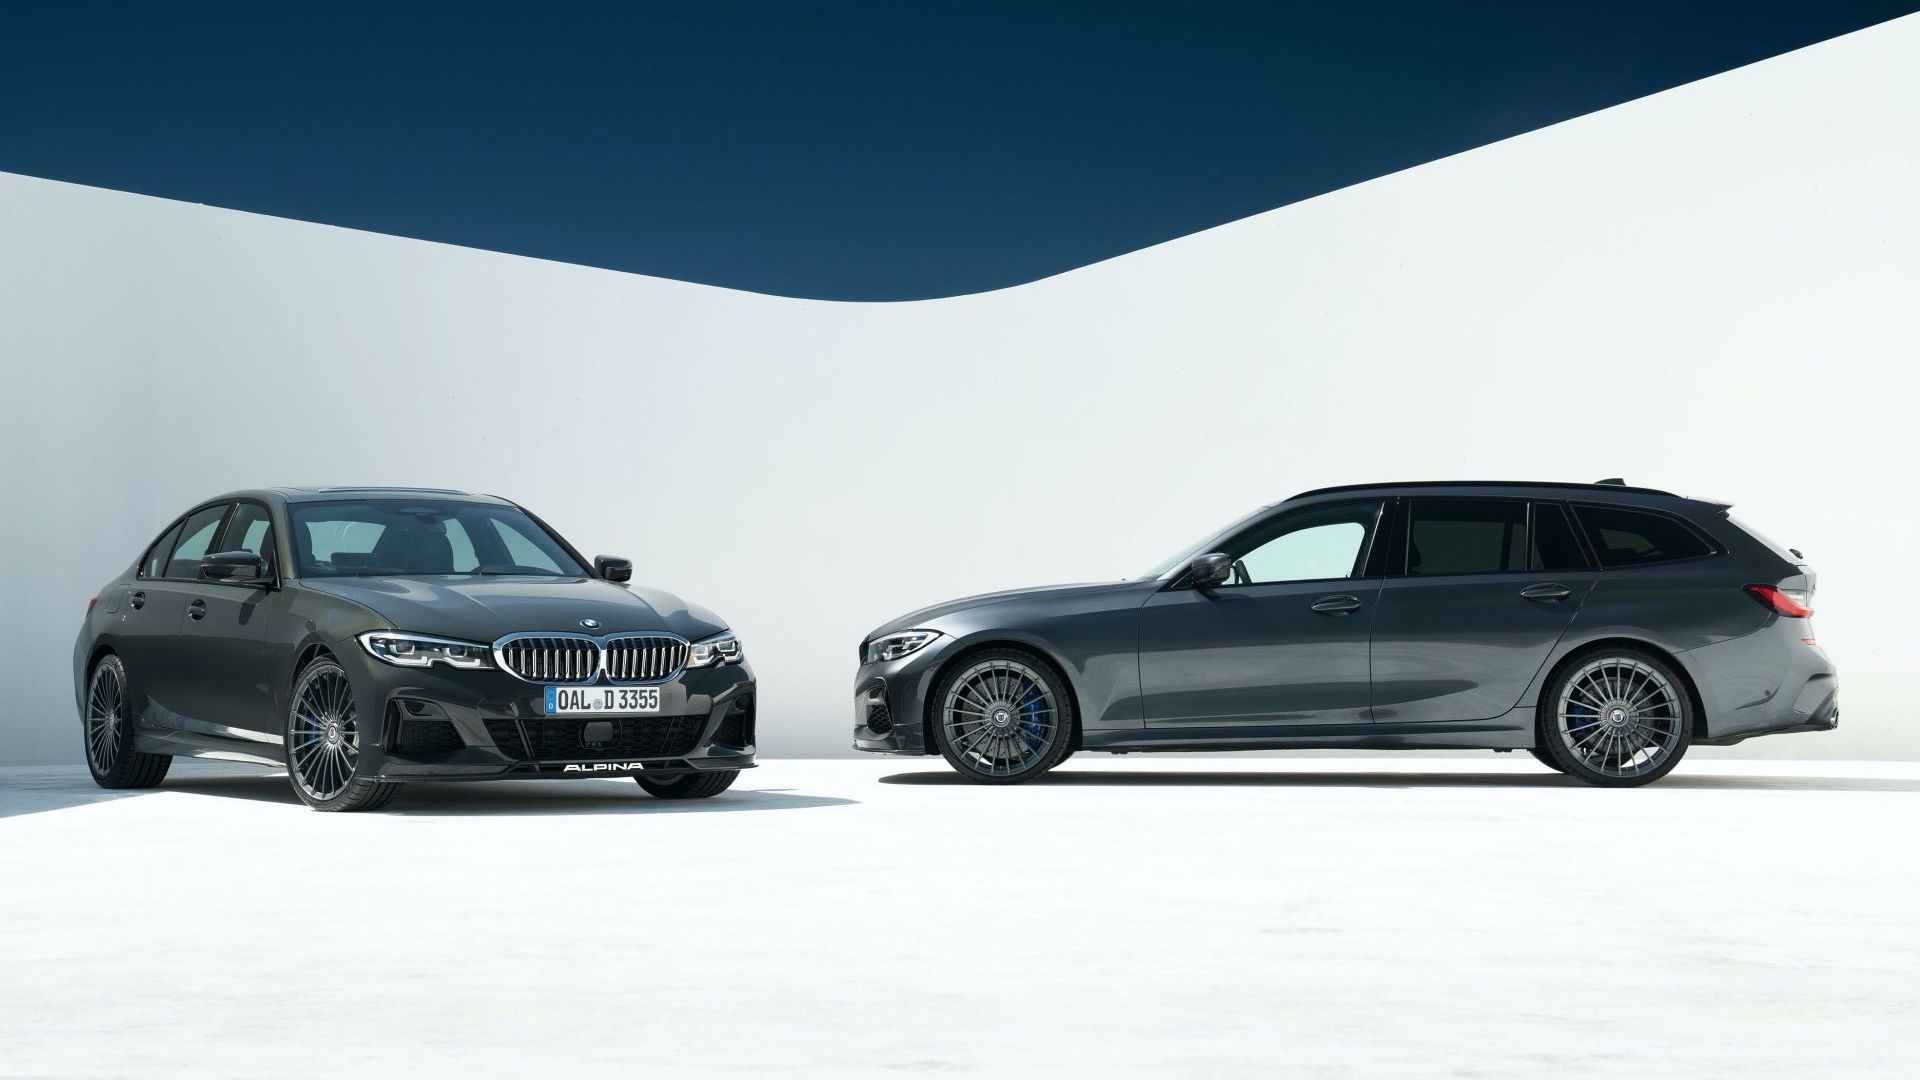 2020 BMW Alpina D3 S and D3 S Touring